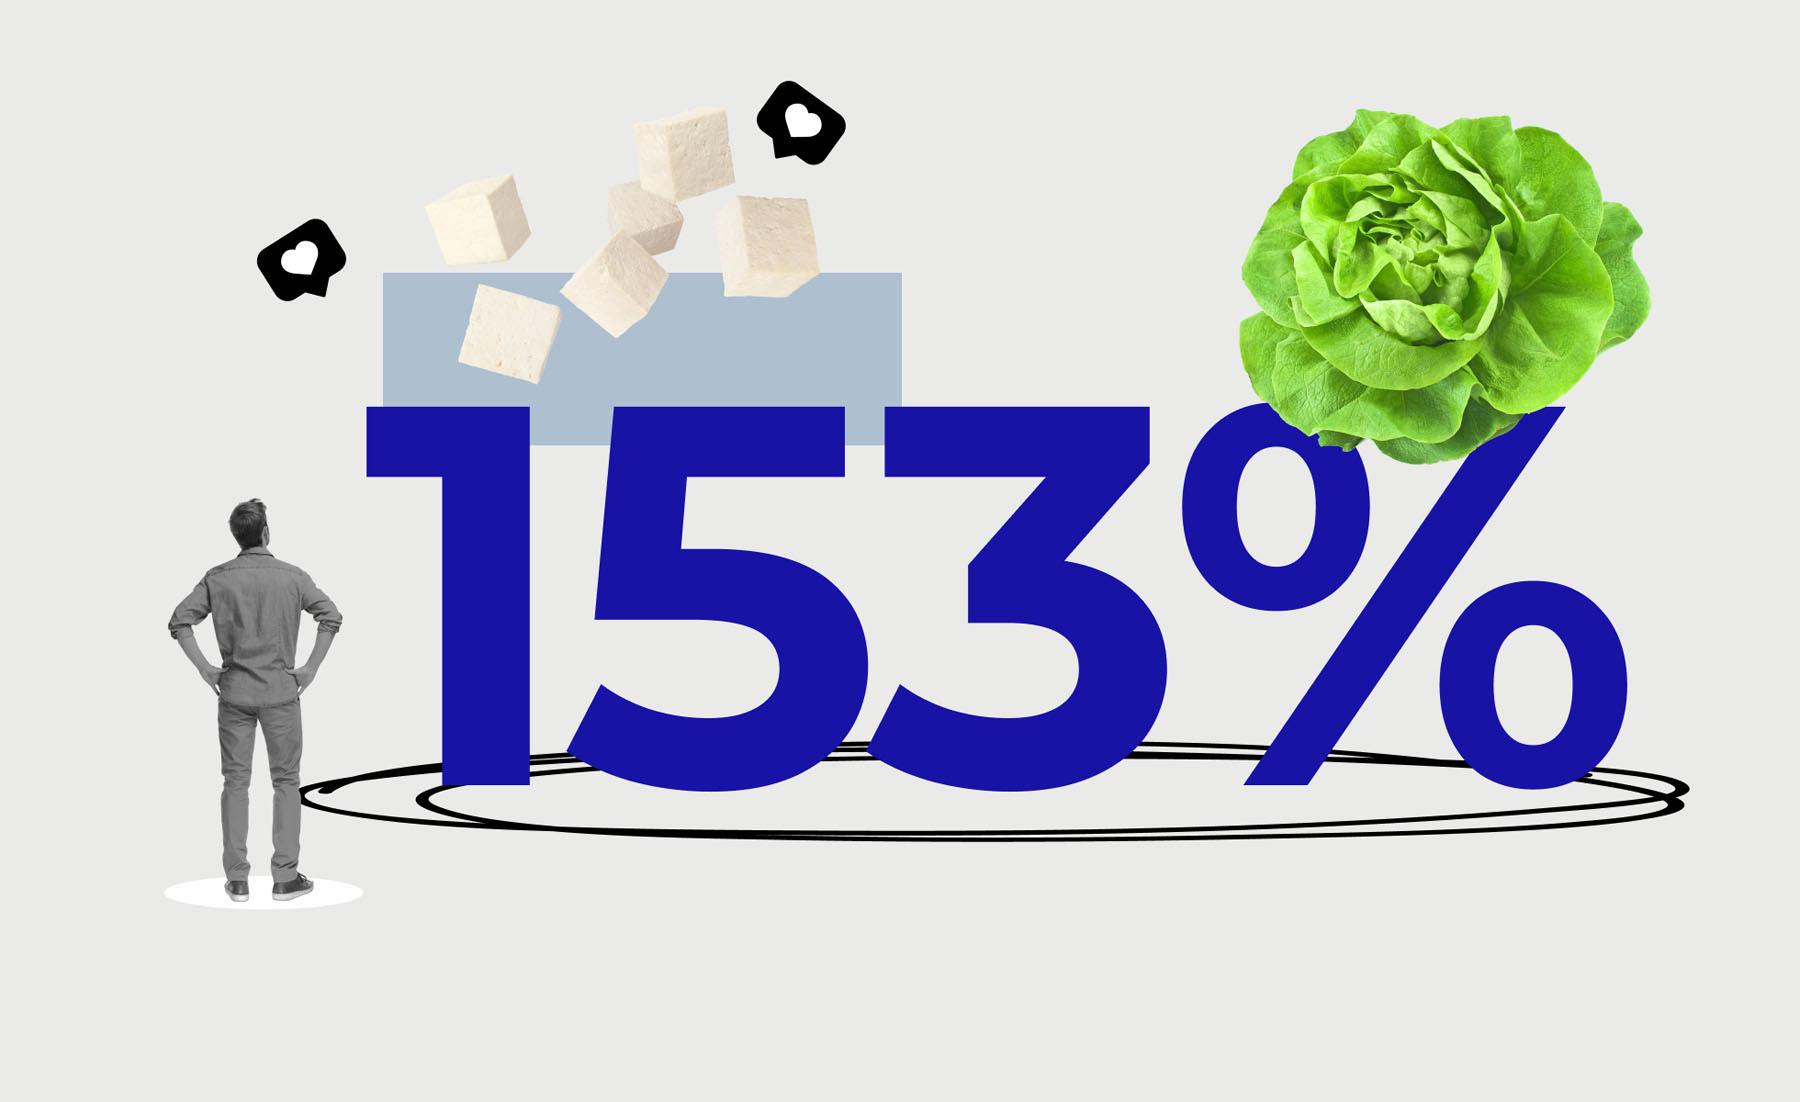 153%  in vegan food items,  ordered via Flipdish-powered restaurants